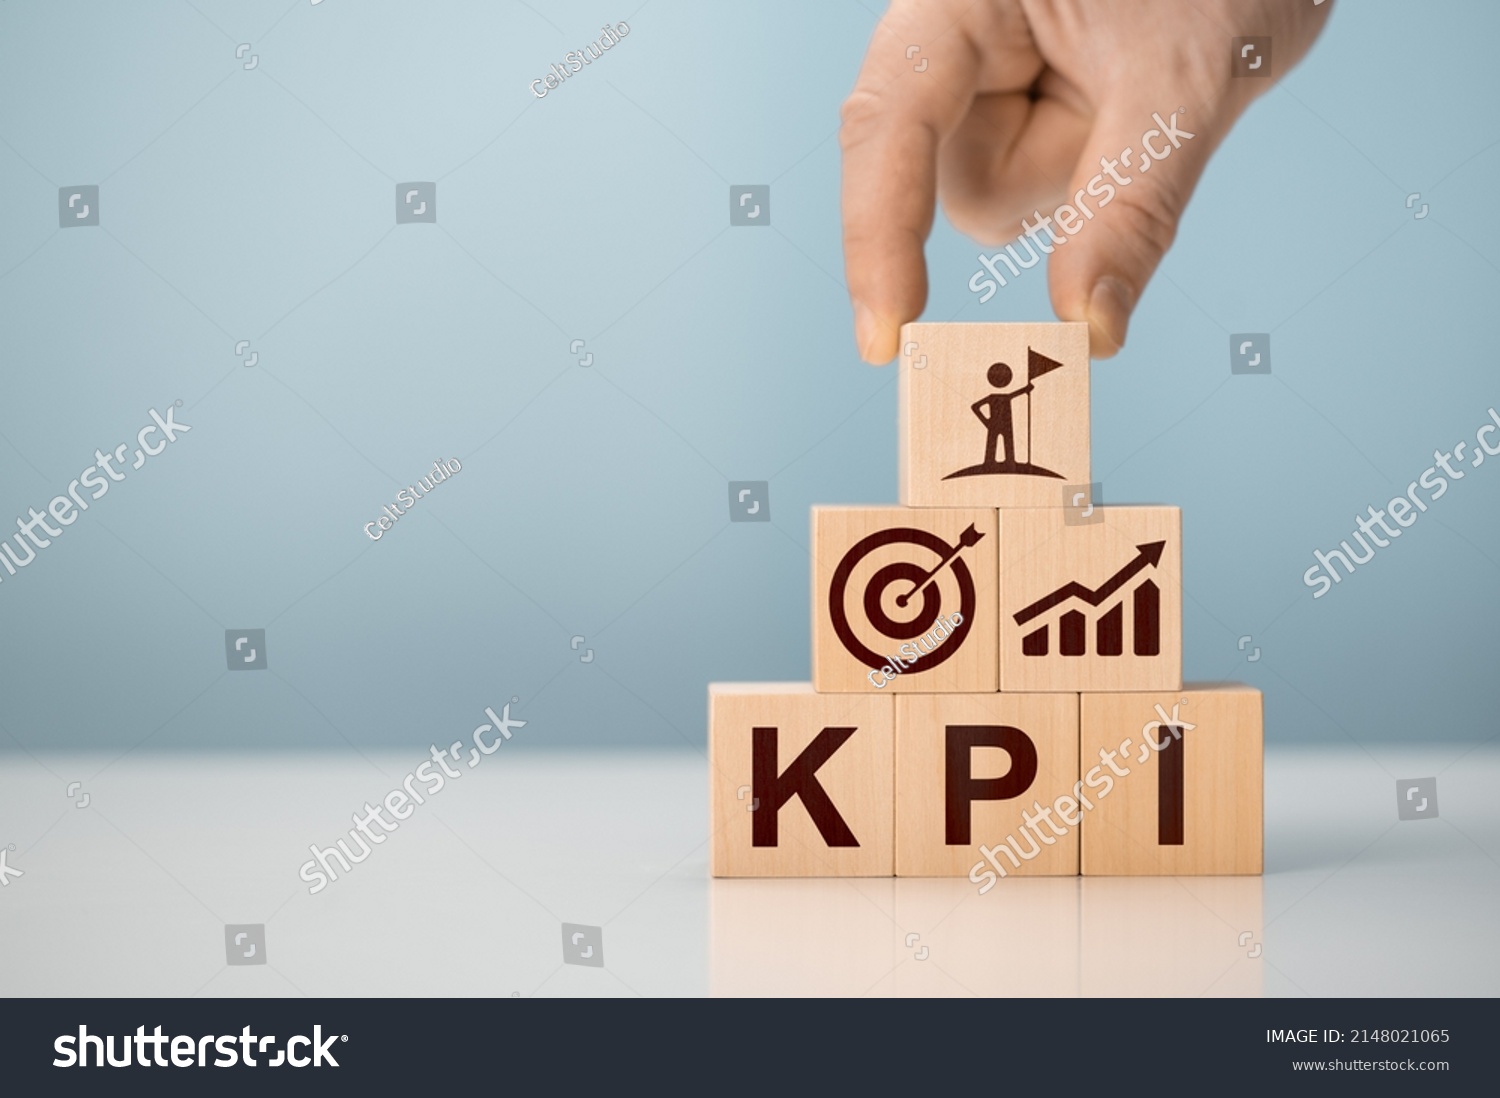 KPI - Key Performance Indicator. Businessman holds cube with KPI icon, KPI key performance indicator increase optimisation business. Business planning and measure success, target achievement. #2148021065